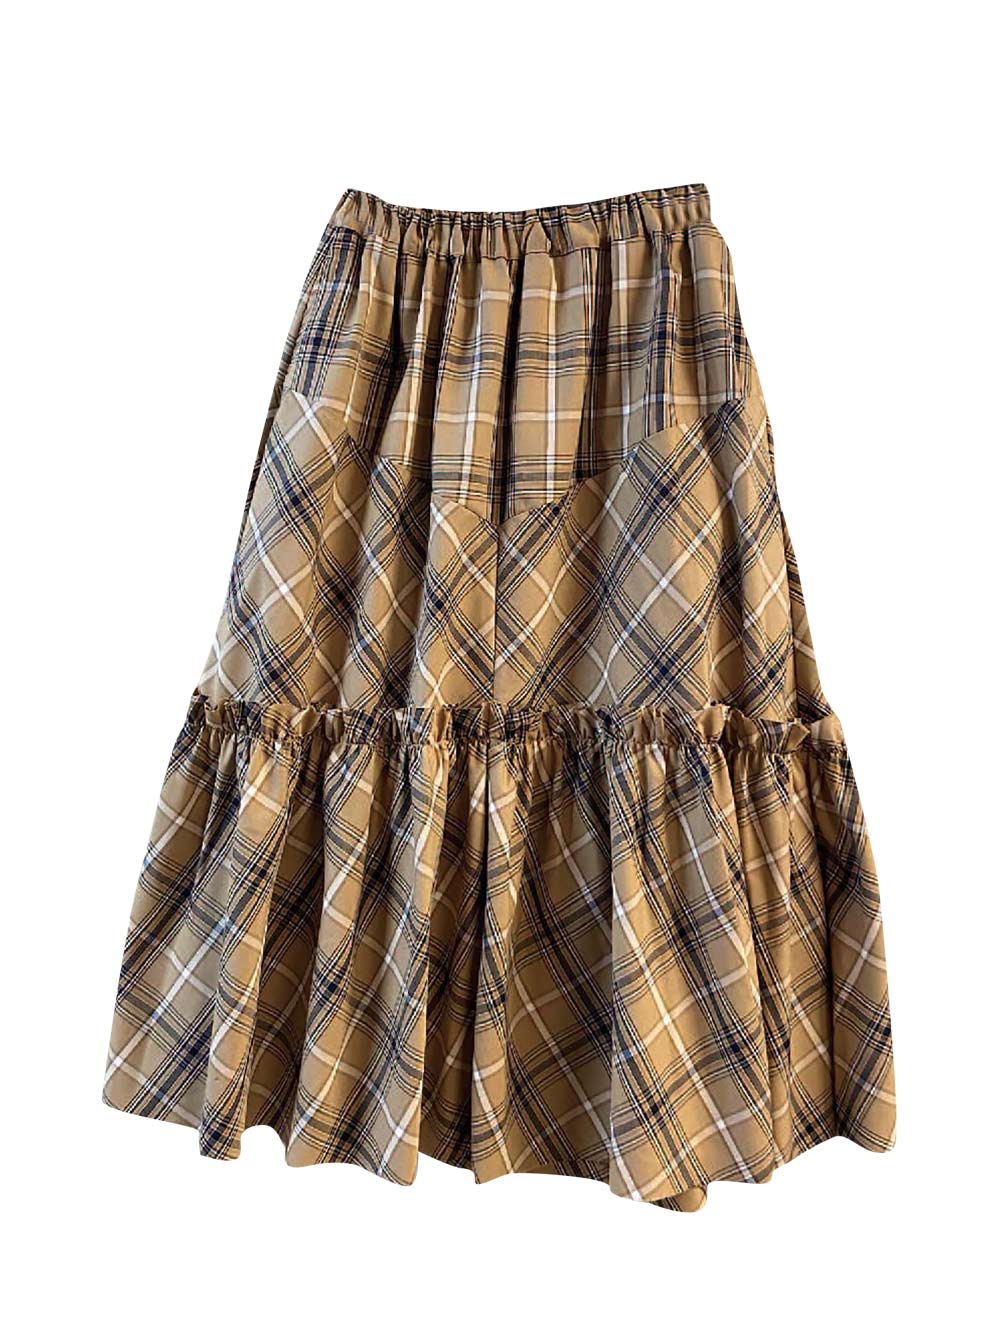 PREORDER: Beige Plaid Skirt